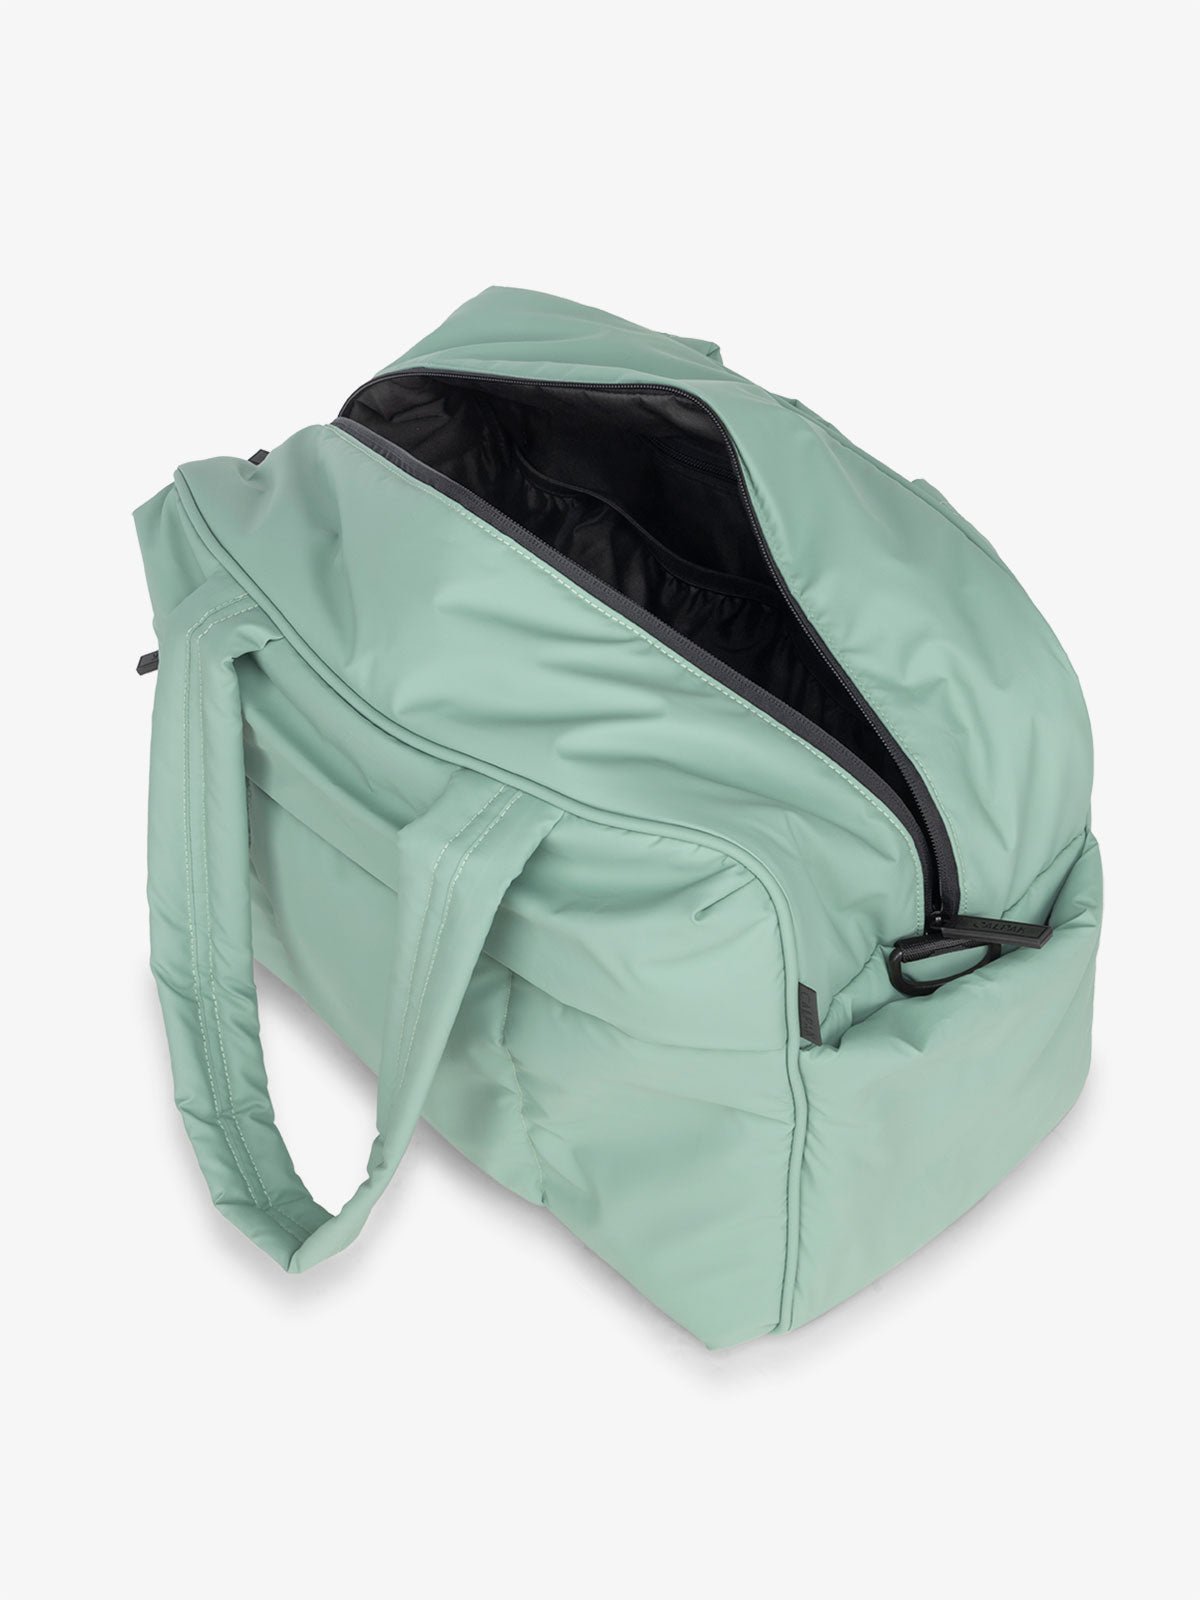 CALPAK Luka puffy Duffel Bag for women in sage